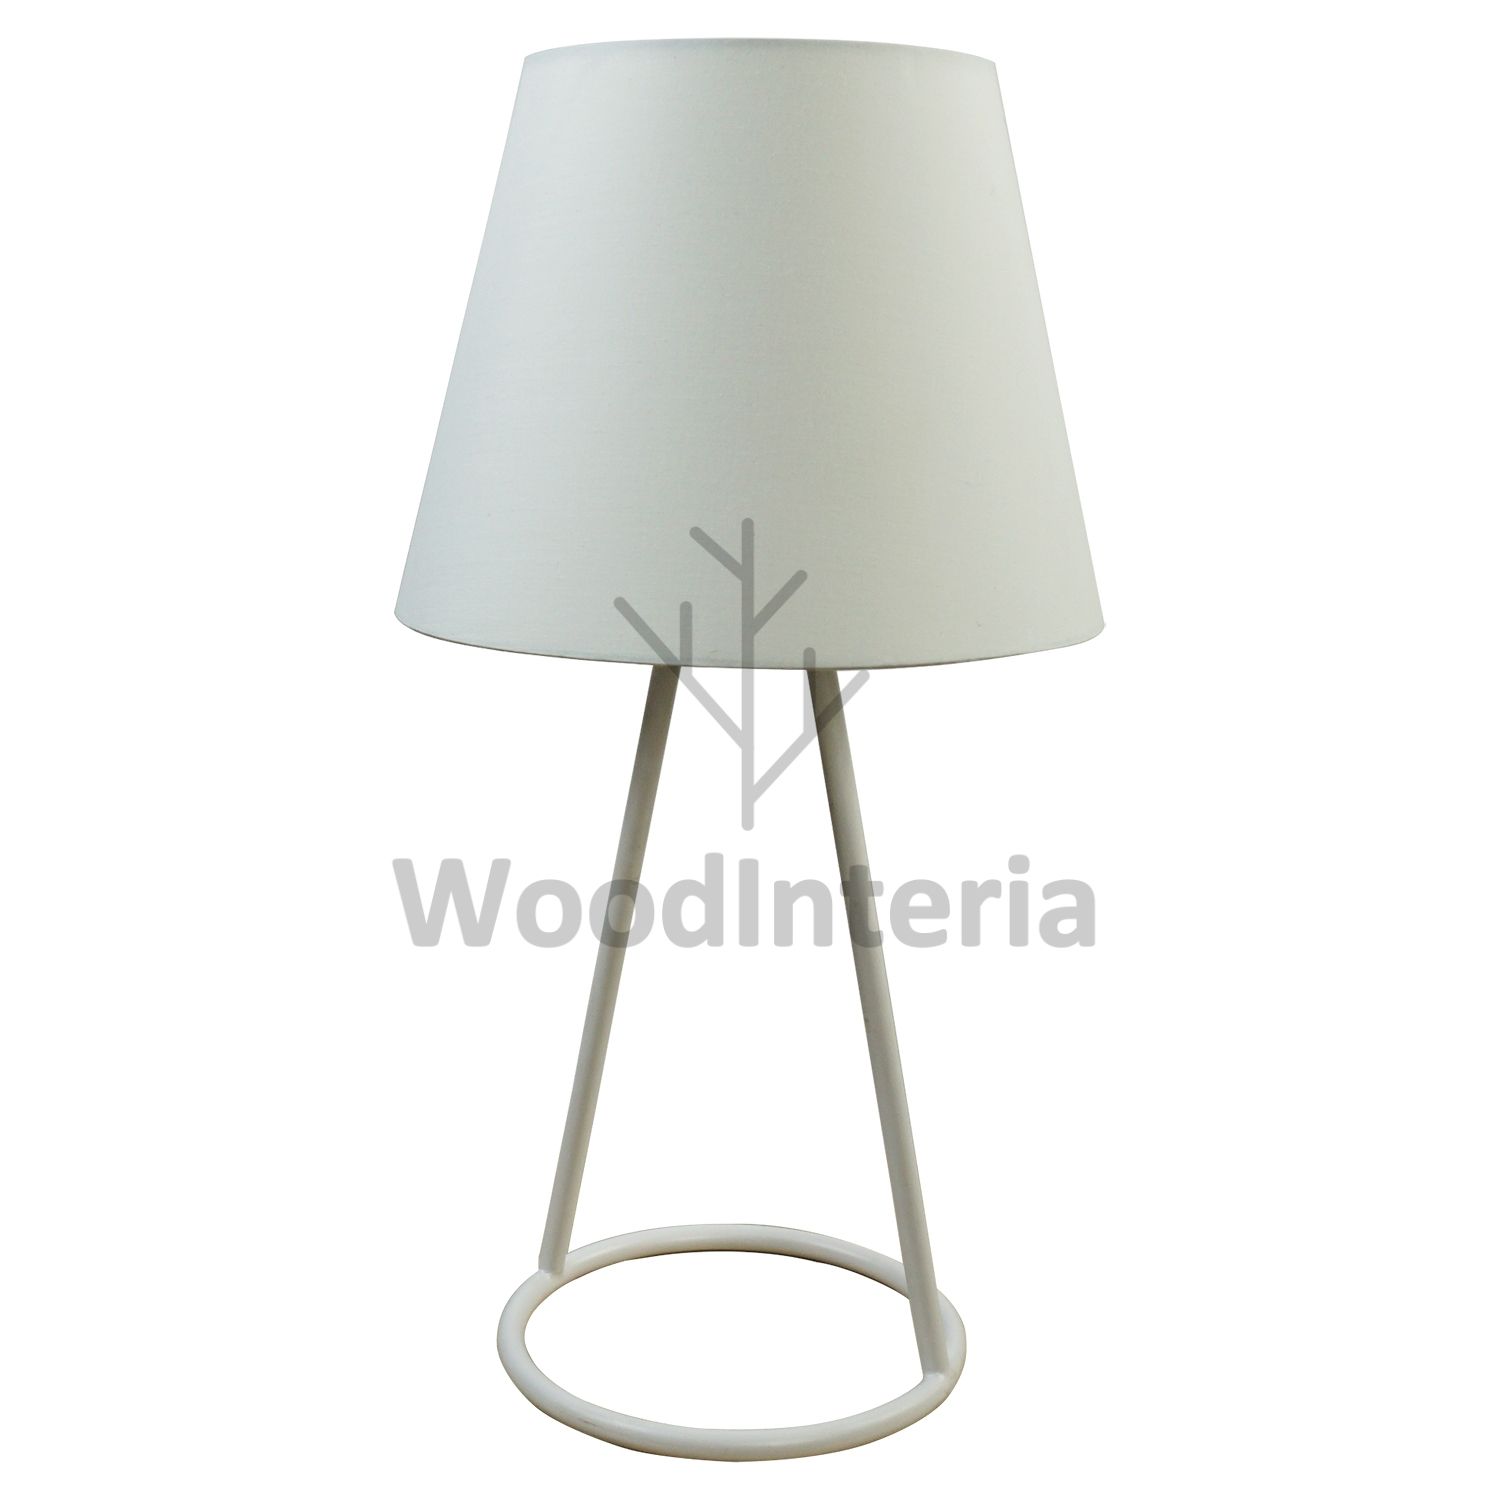 настольная лампа circles & curves white в стиле лофт индастриал WoodInteria